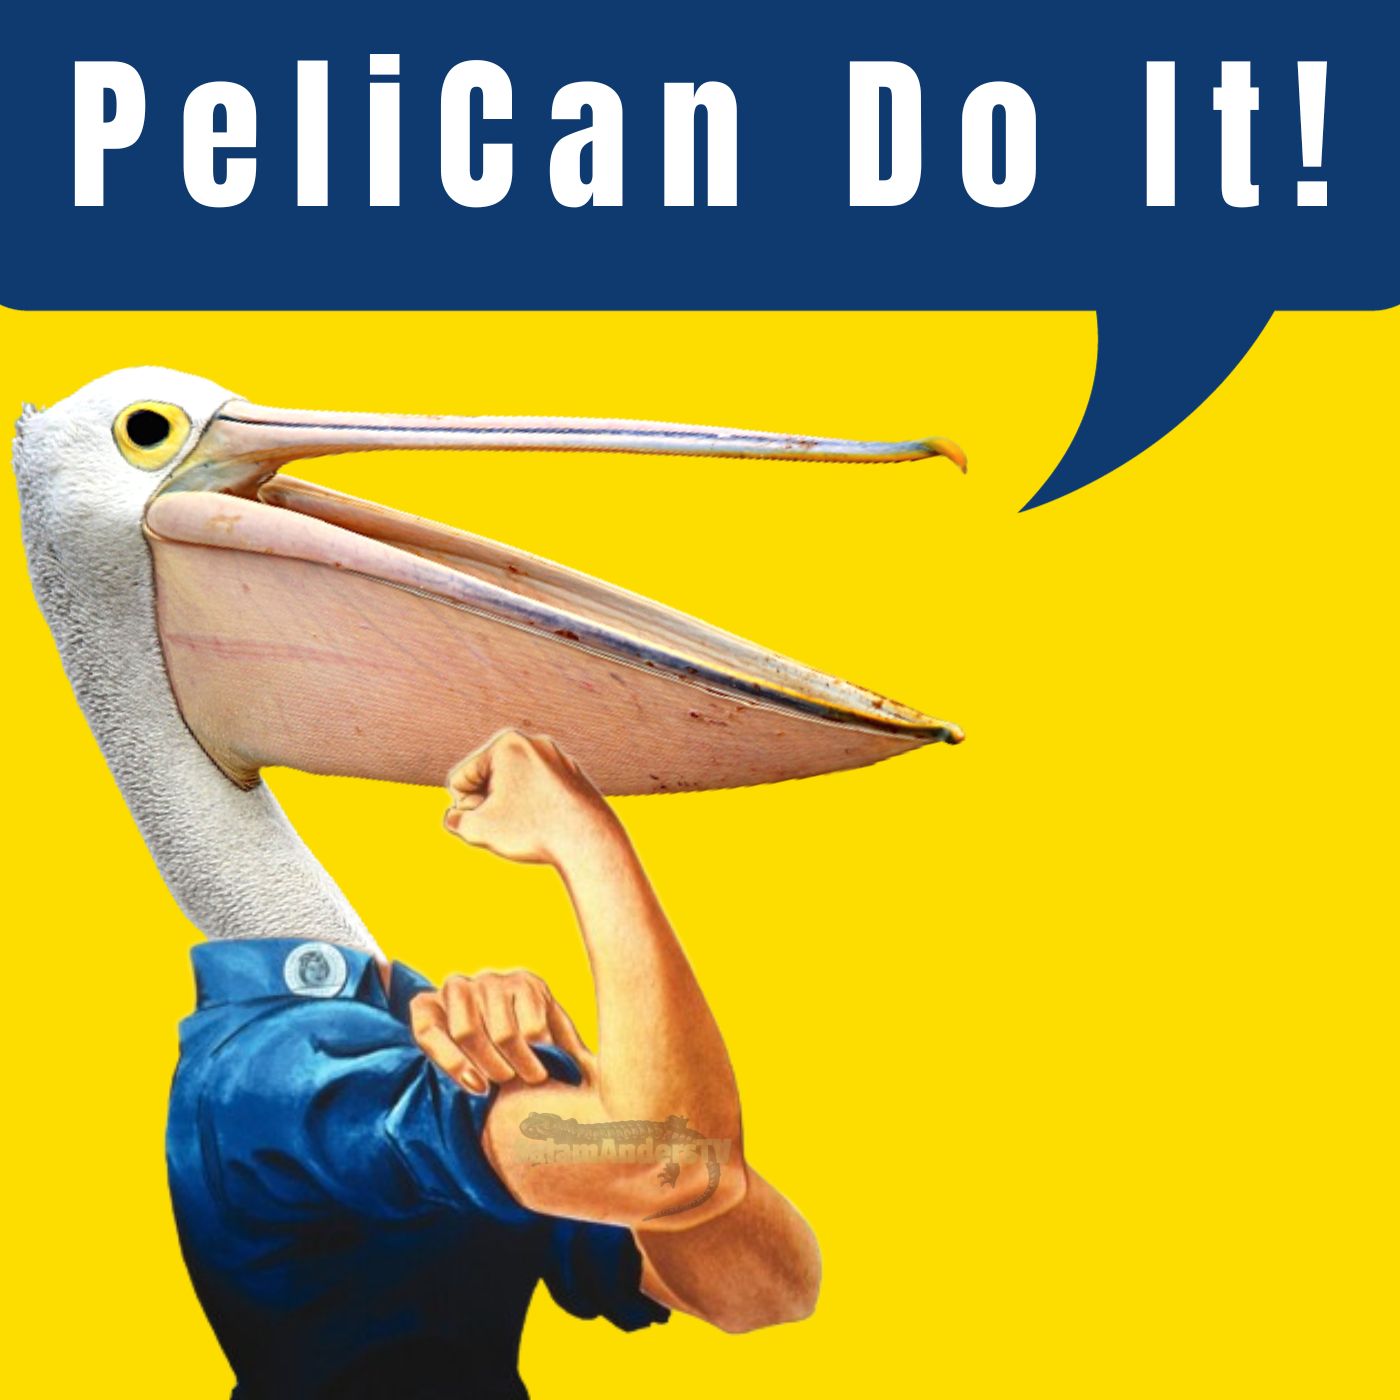 Finally a Pelican!.jpg